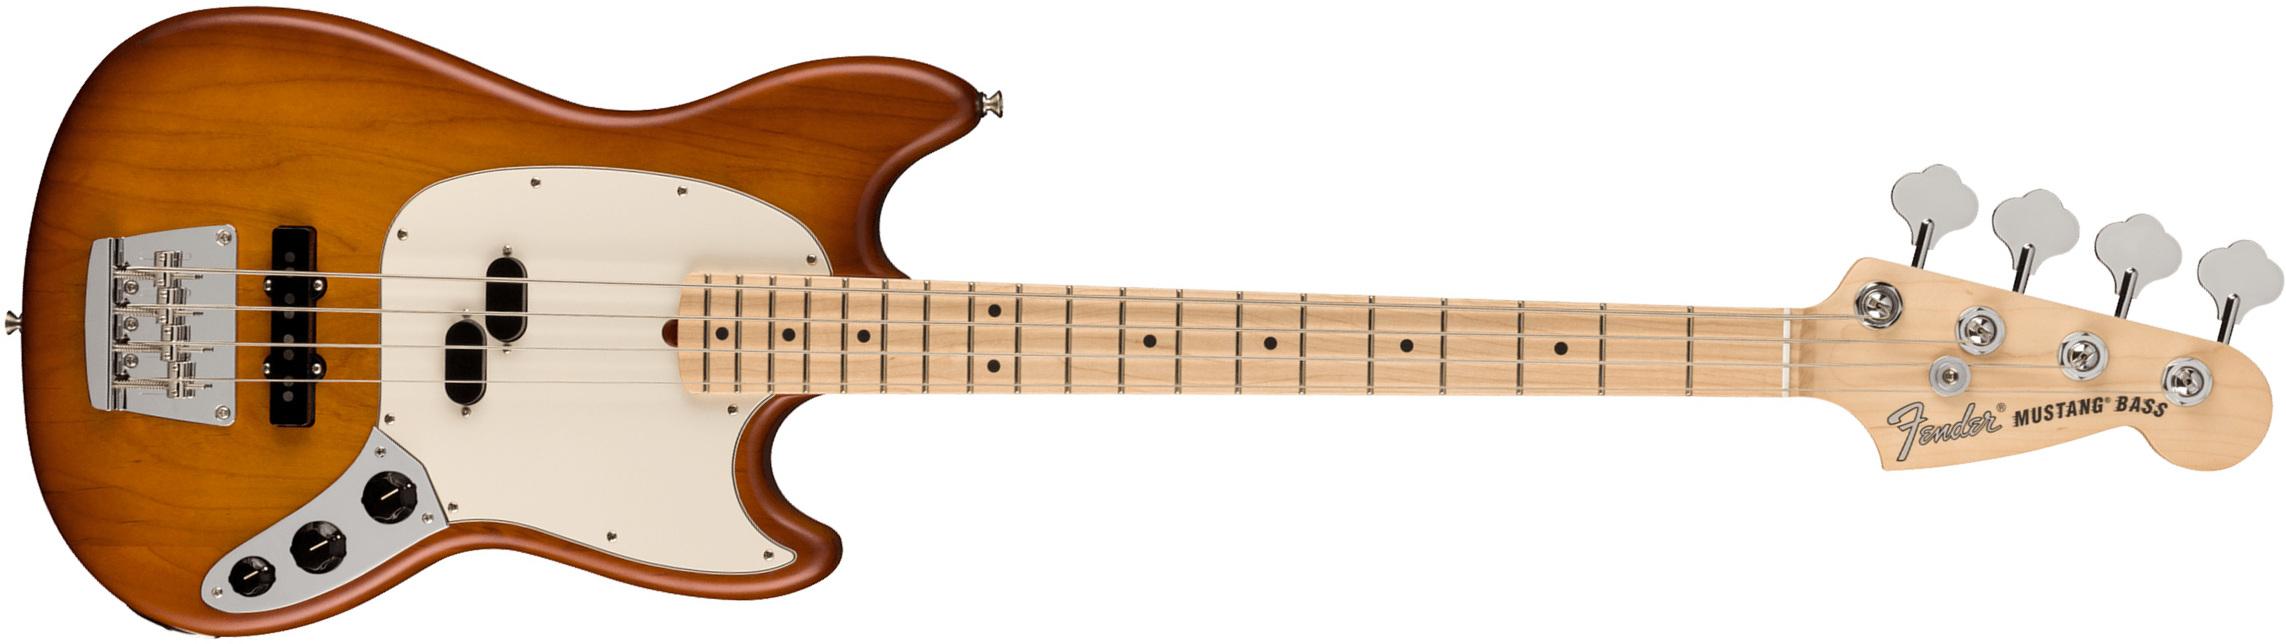 Fender Mustang Bass American Performer Ltd Usa Rw - Honey Burst Satin - Solid body elektrische bas - Main picture